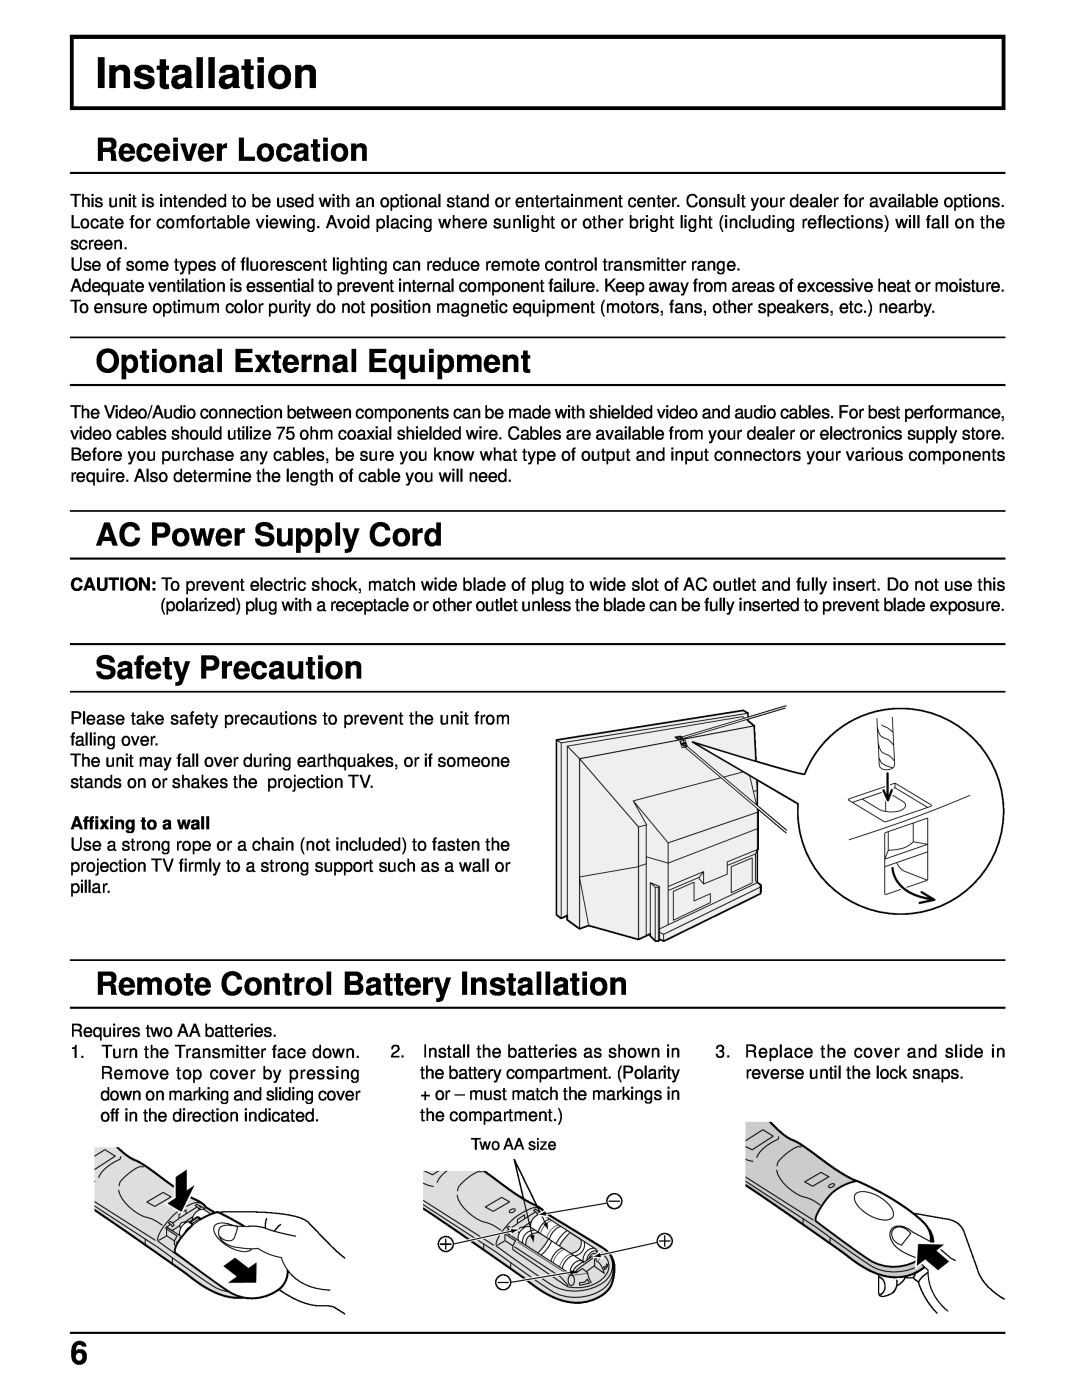 Panasonic PT 52DL52 Installation, Receiver Location, Optional External Equipment, AC Power Supply Cord, Safety Precaution 